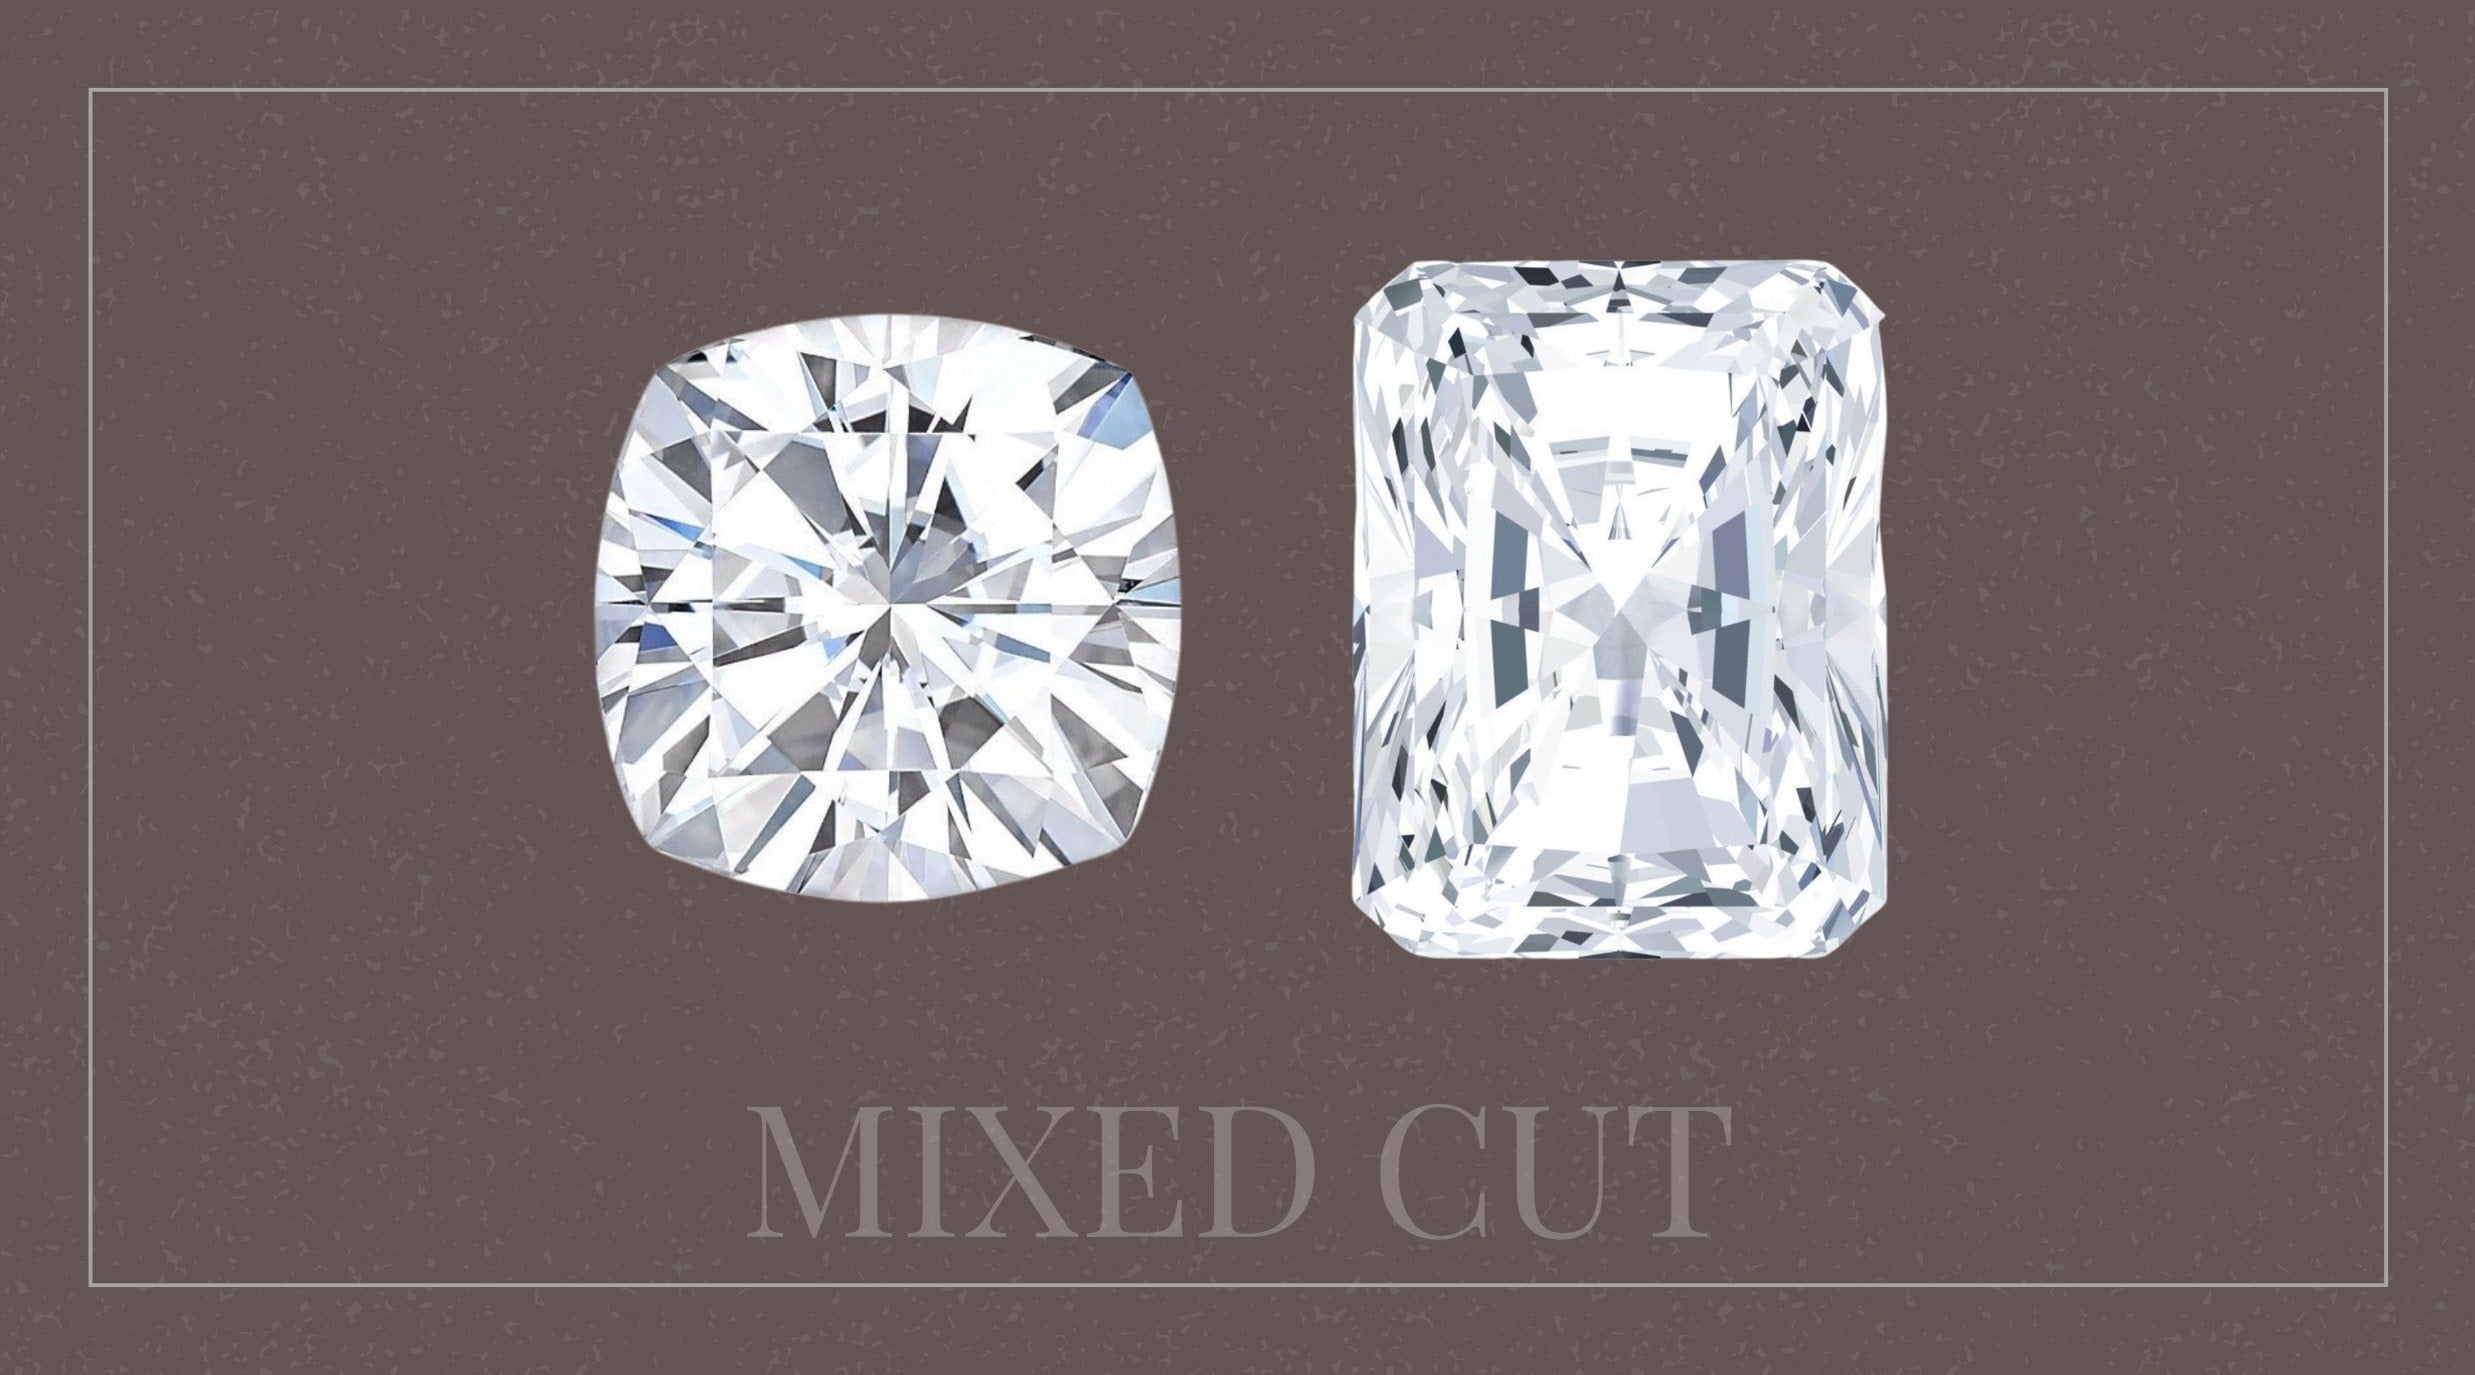 Mixed cut diamonds